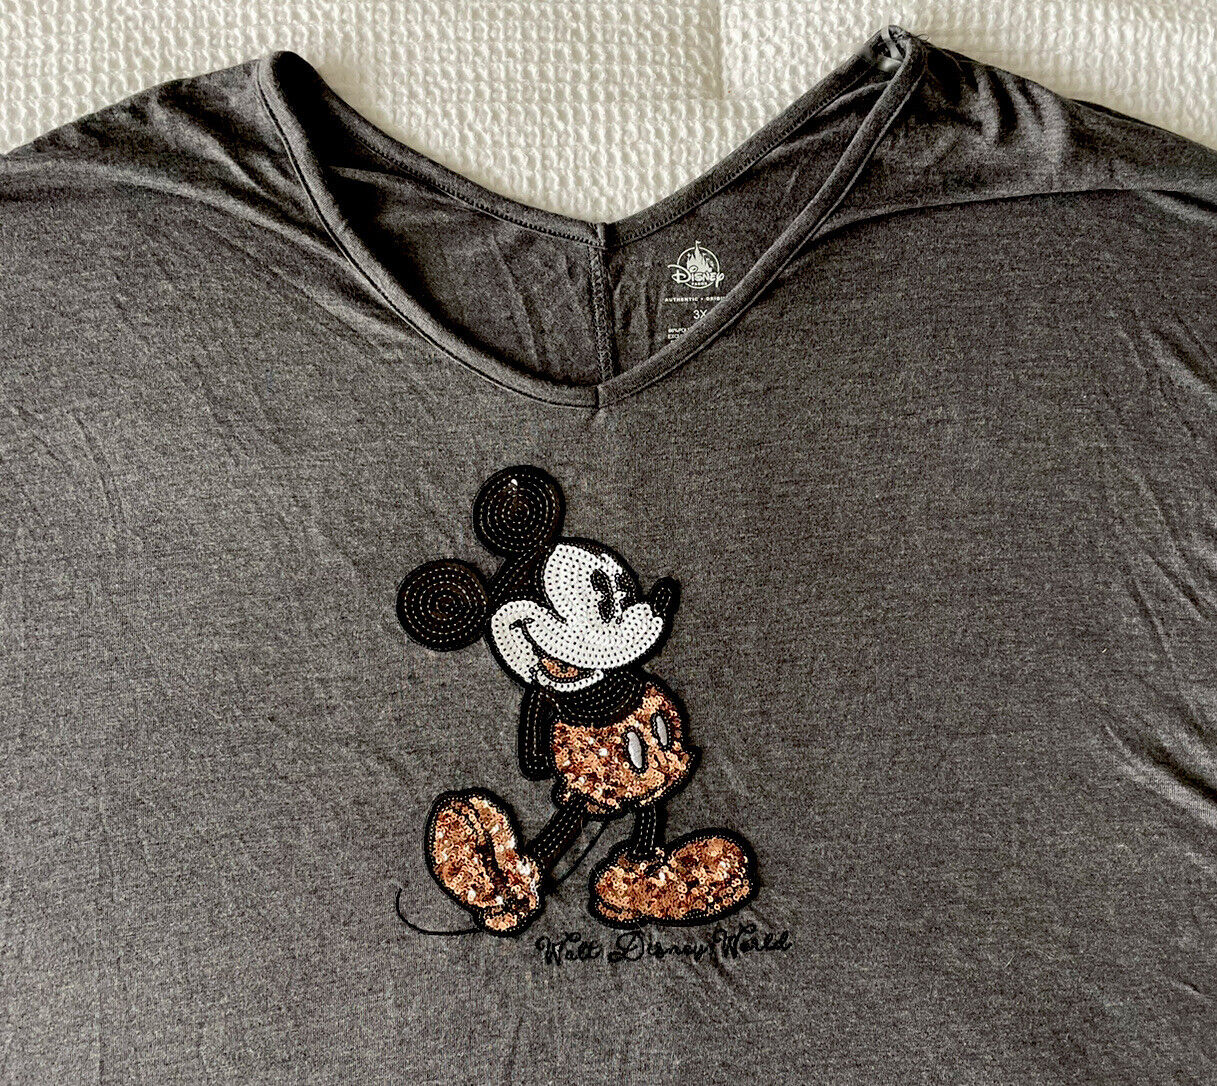 NWT Disney Womens 3XL 3X XXXL T-shirt Gray V-neck Crop Mickey Mouse Embroidered